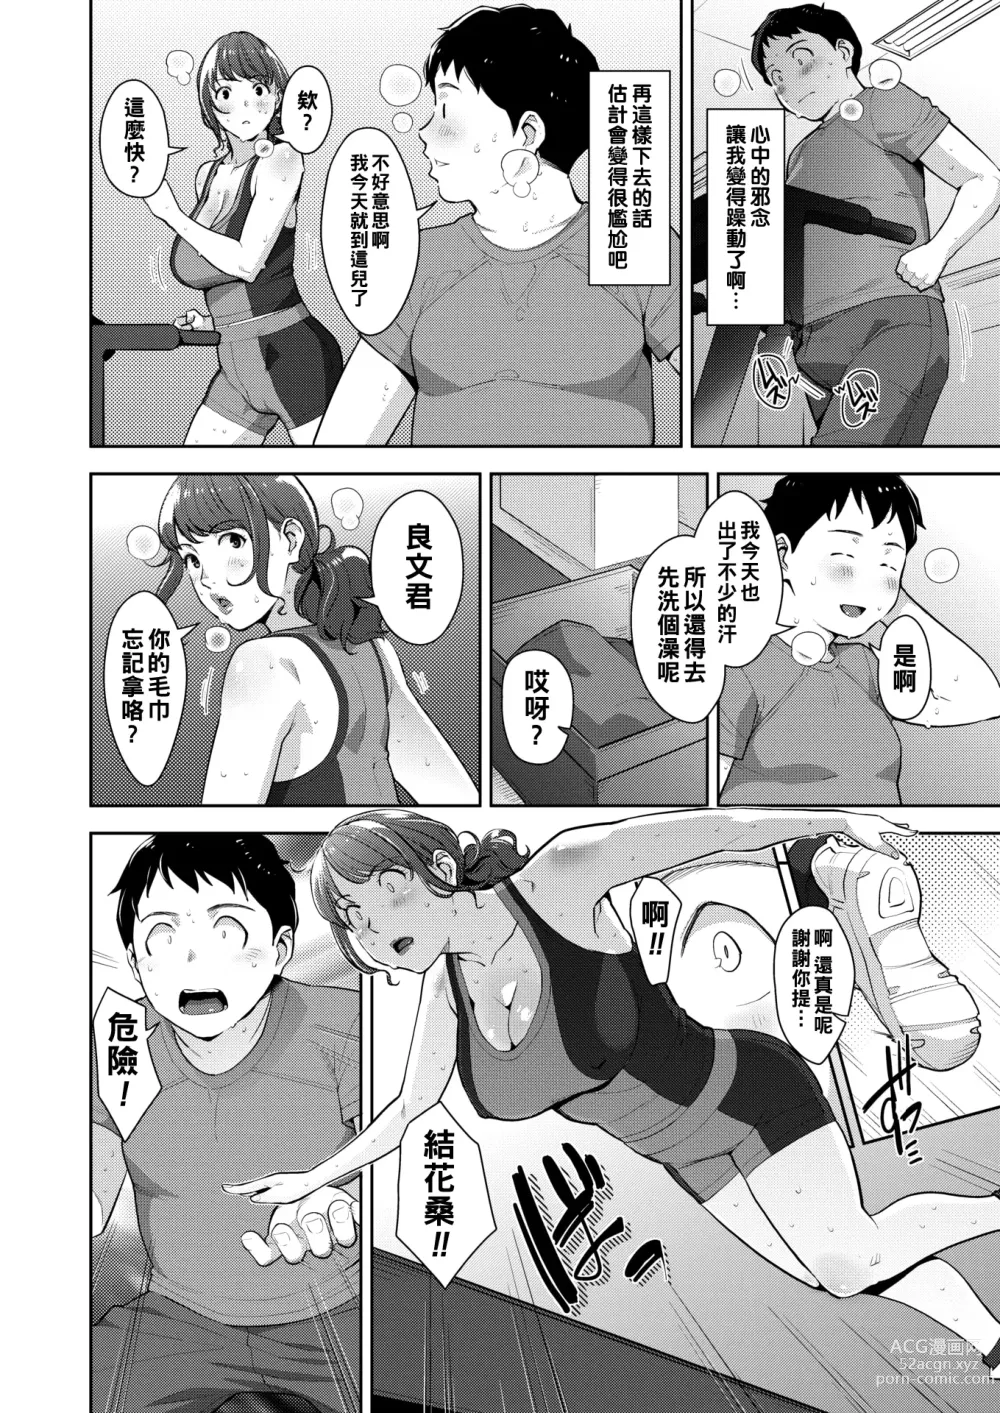 Page 4 of manga PHYSICAROOM